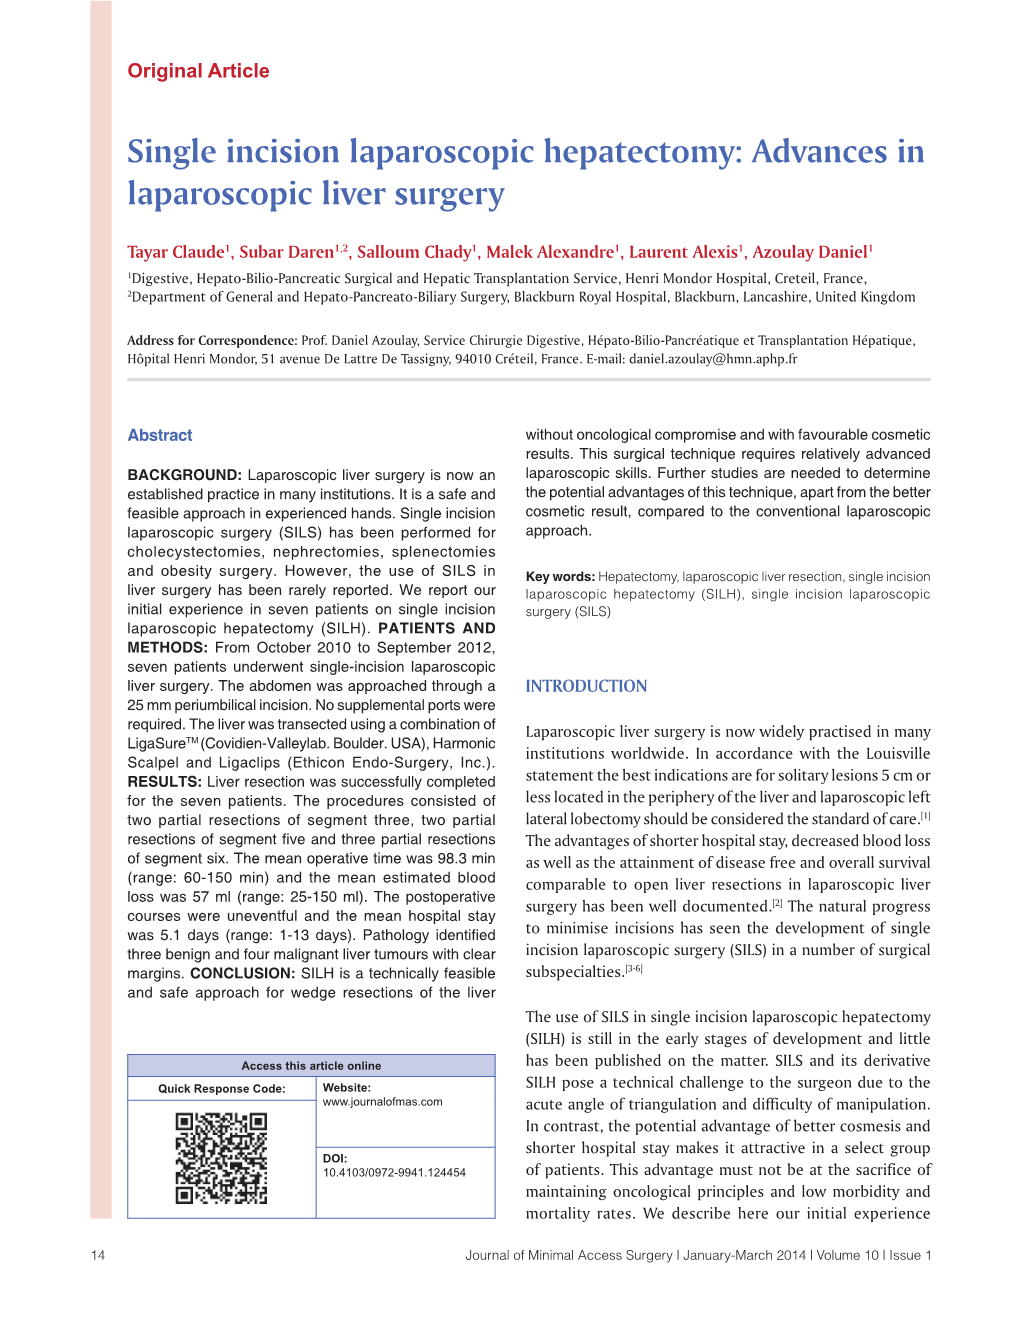 Single Incision Laparoscopic Hepatectomy: Advances in Laparoscopic Liver Surgery